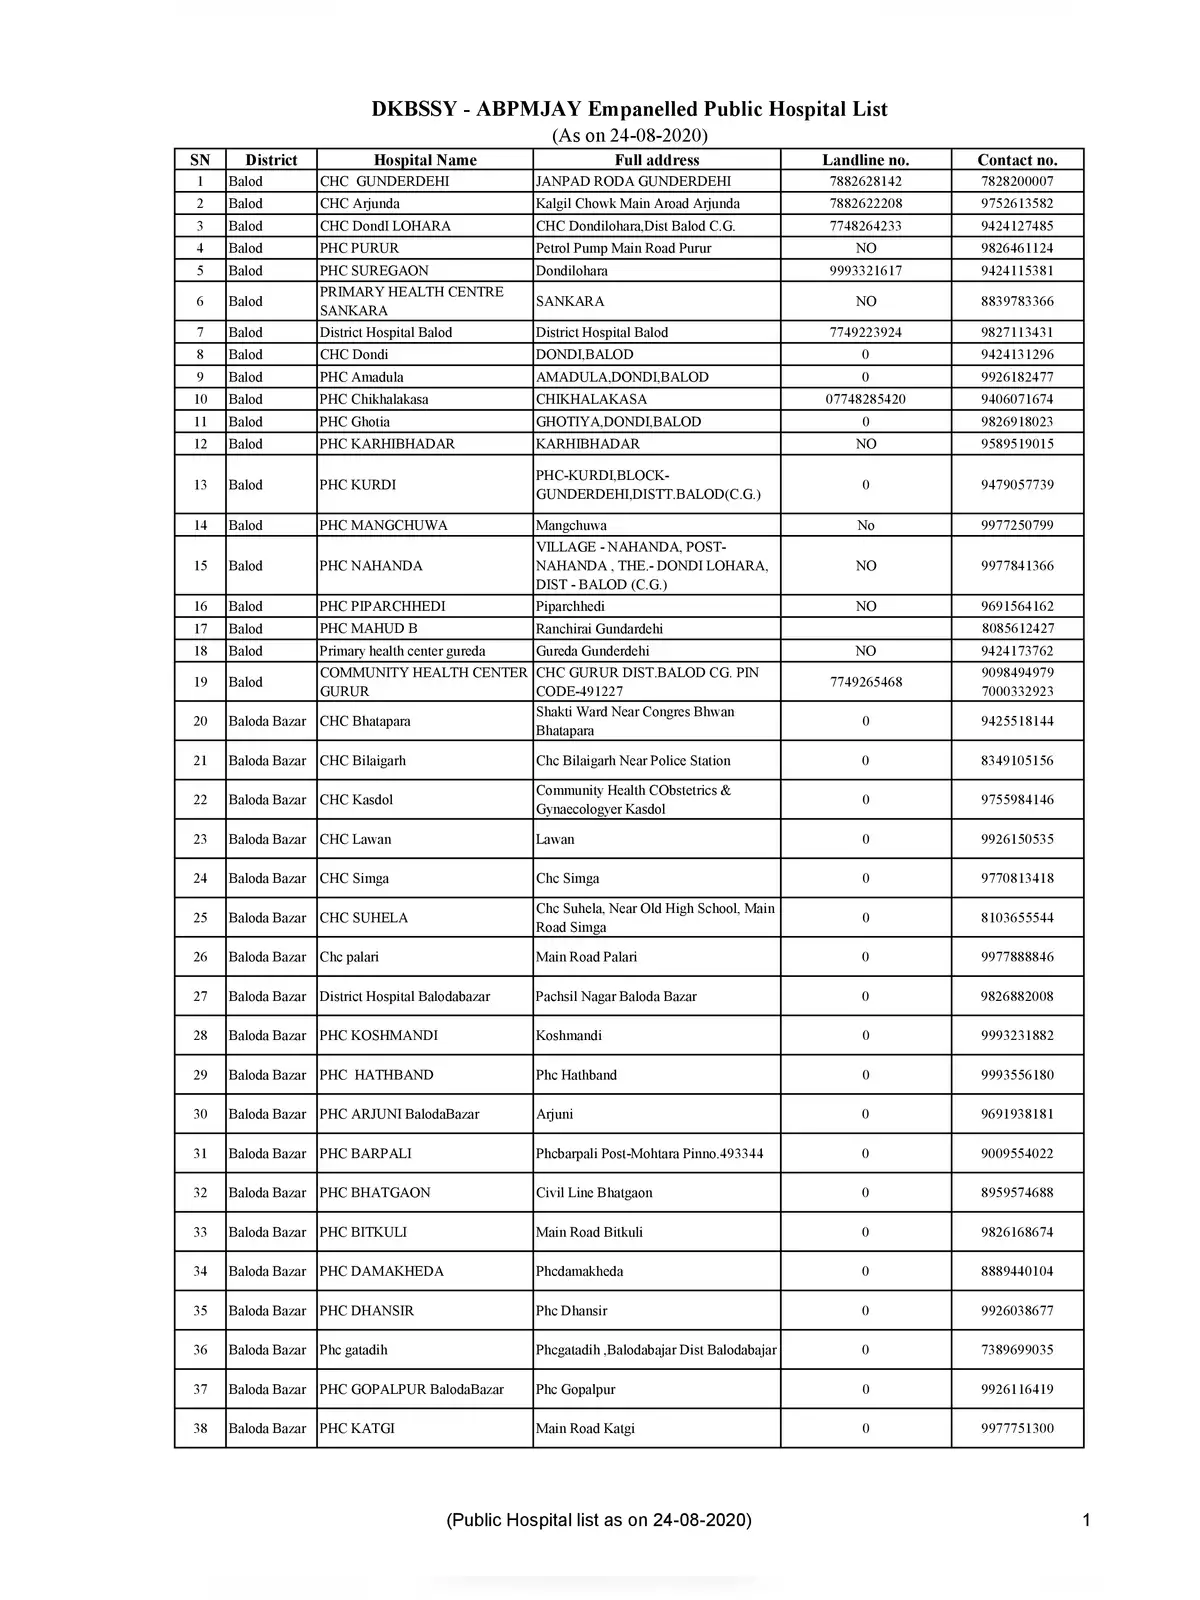 ABPMJAY Empanelled Public Hospital List